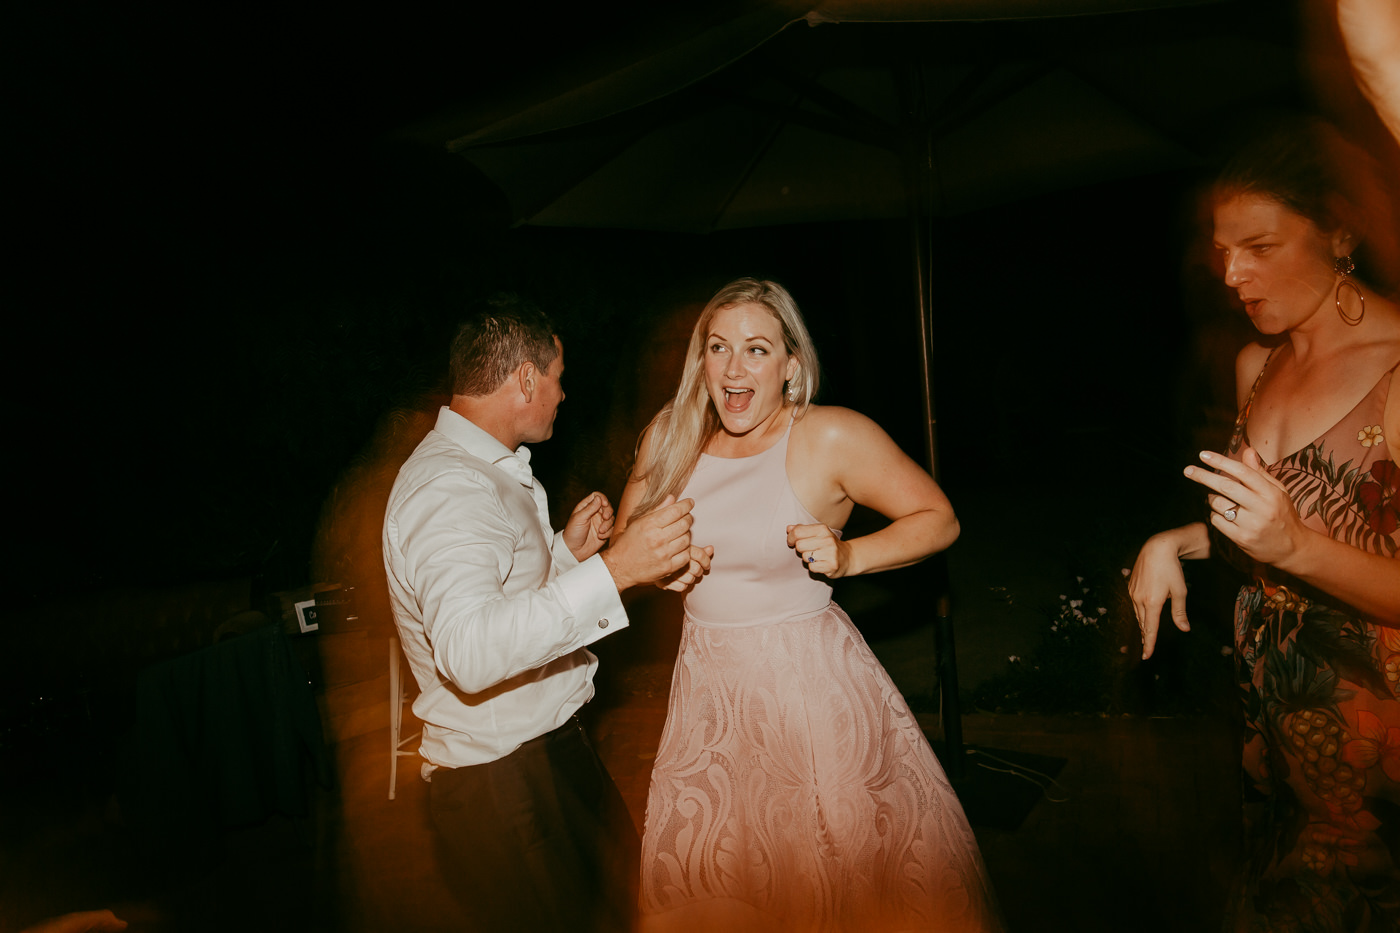 Anthony & Eliet - Wagga Wagga Wedding - Country NSW - Samantha Heather Photography-183.jpg